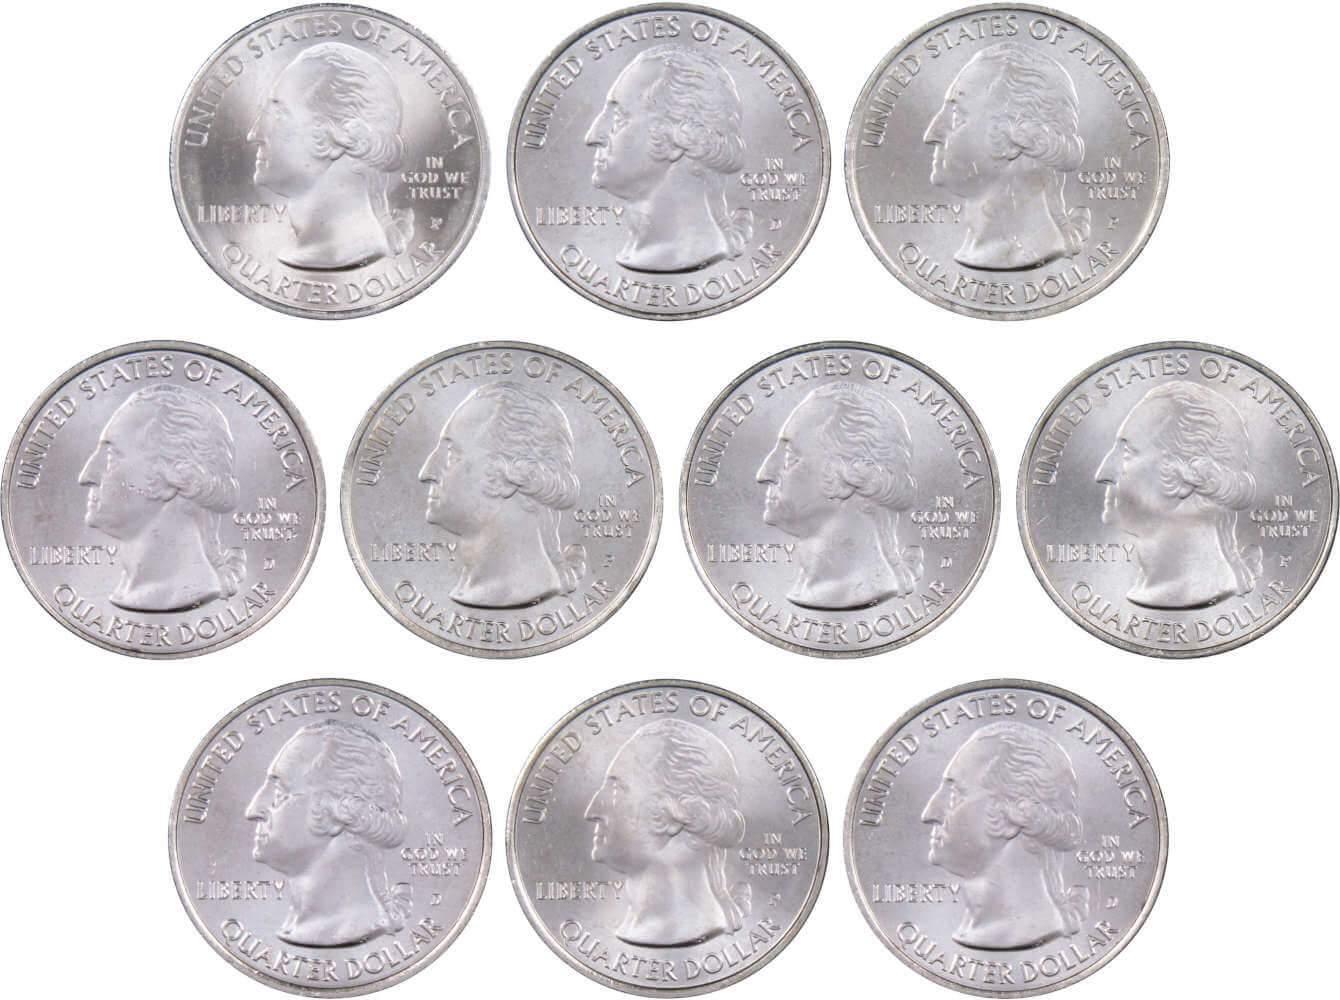 2013 P&D National Park Quarter 10 Coin Set Uncirculated Mint State 25c